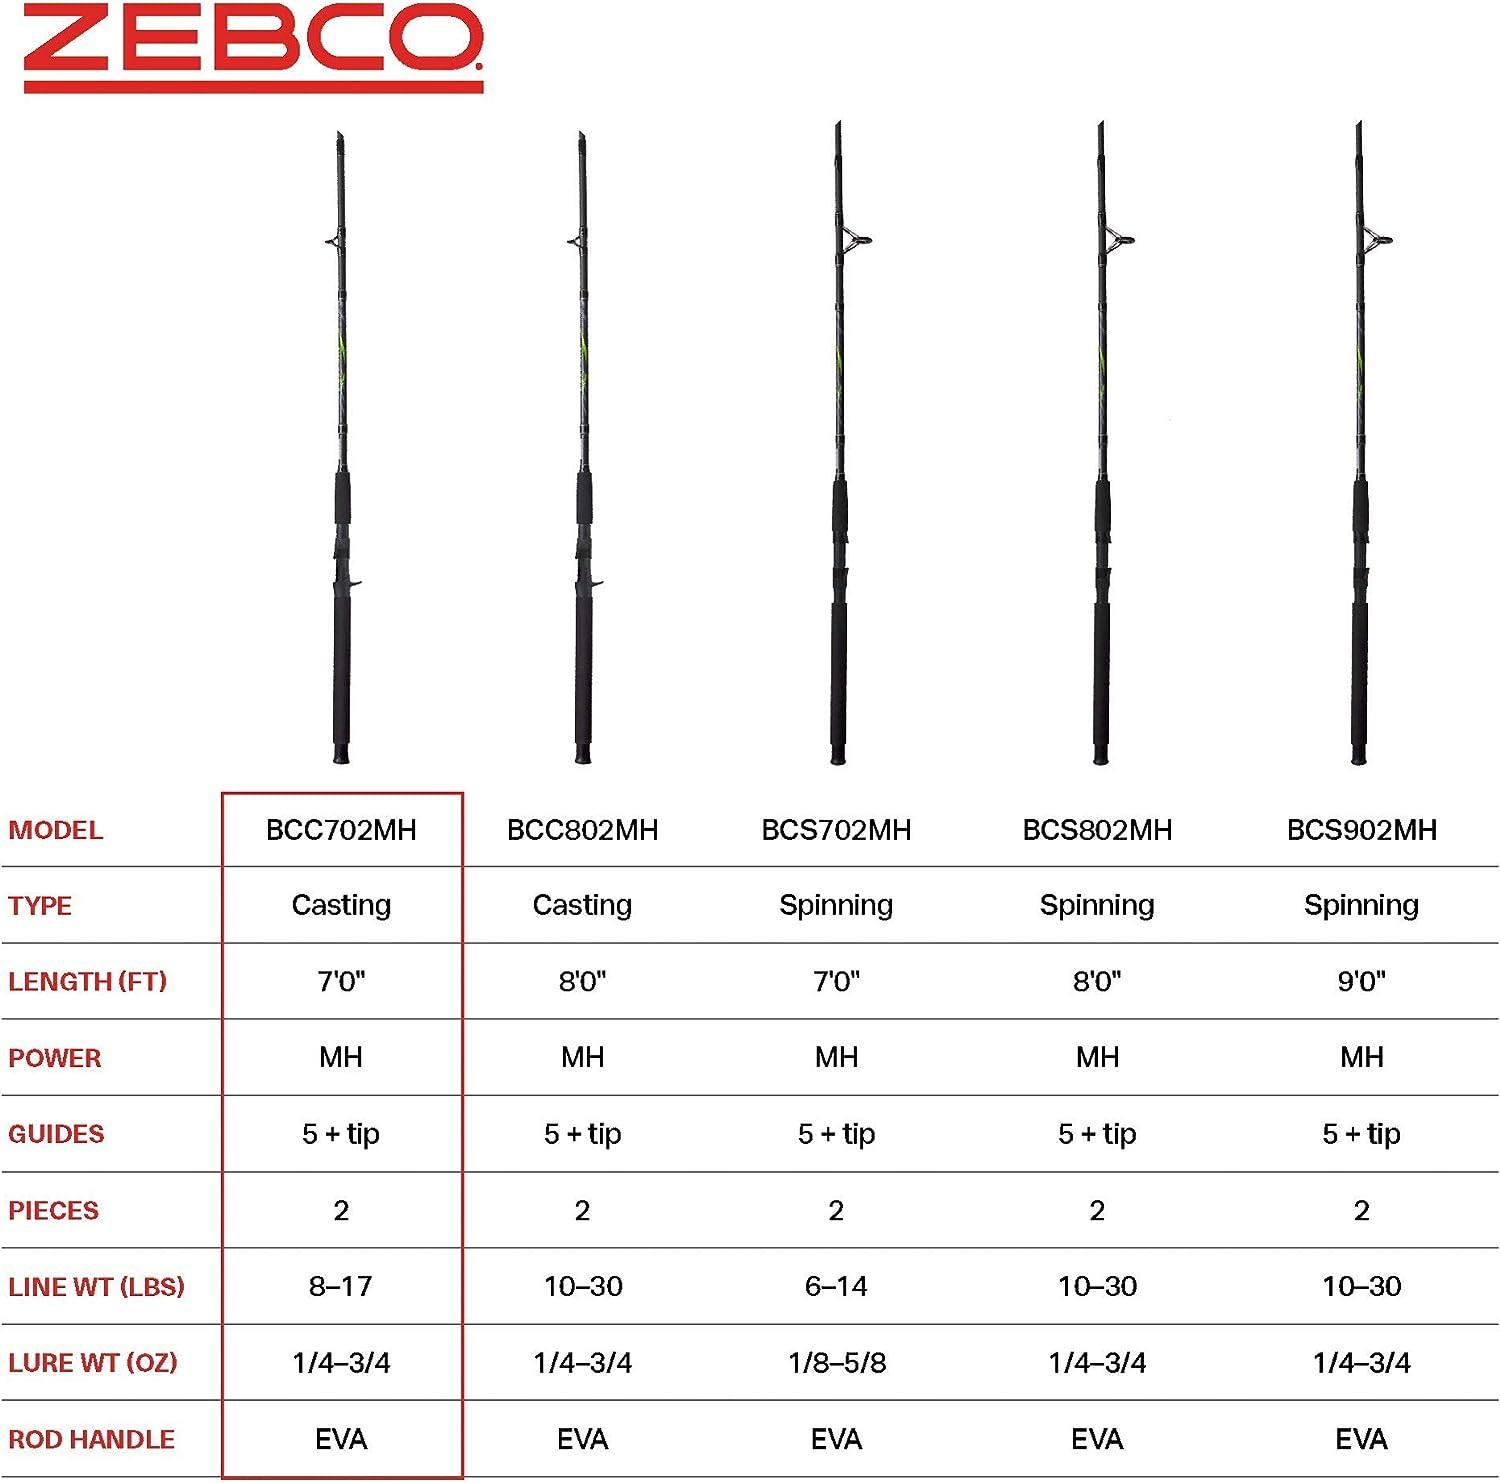 Zebco Big Cat Casting Fishing Rod, 7-Foot 2-Piece Fiberglass